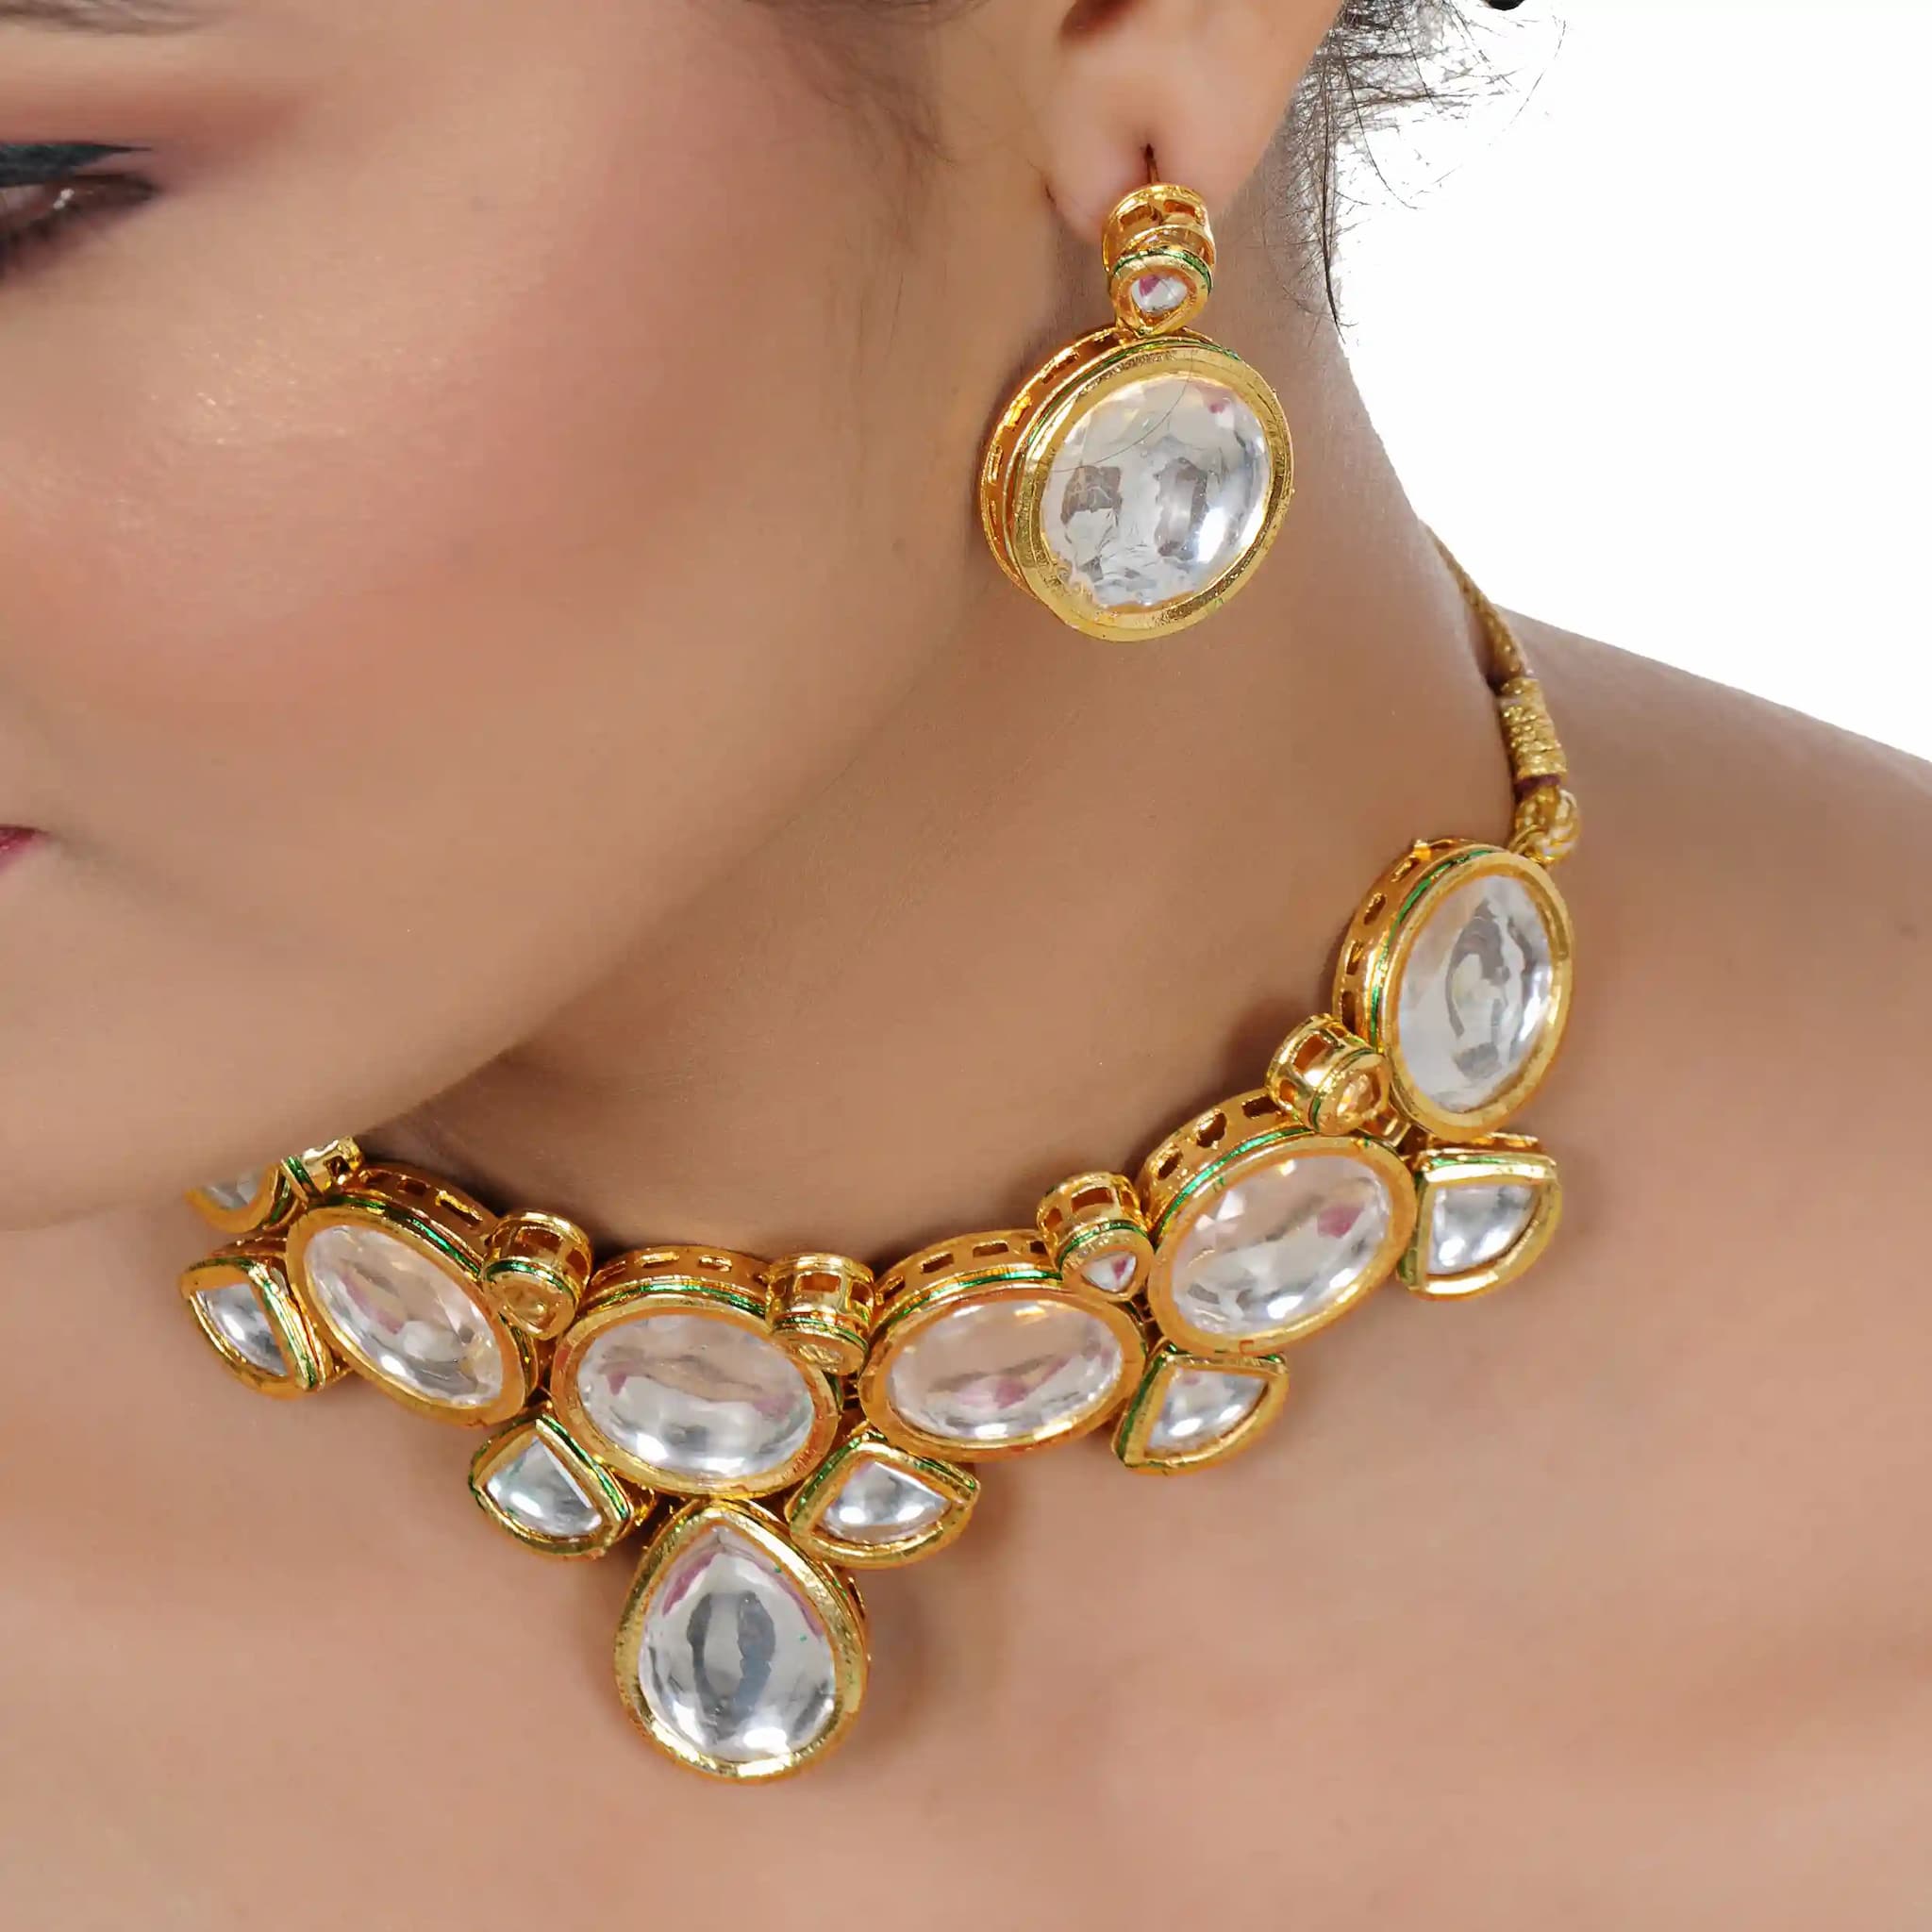 Gold Plated(18k) Big Round Kundan Choker Necklace & Earrings - White